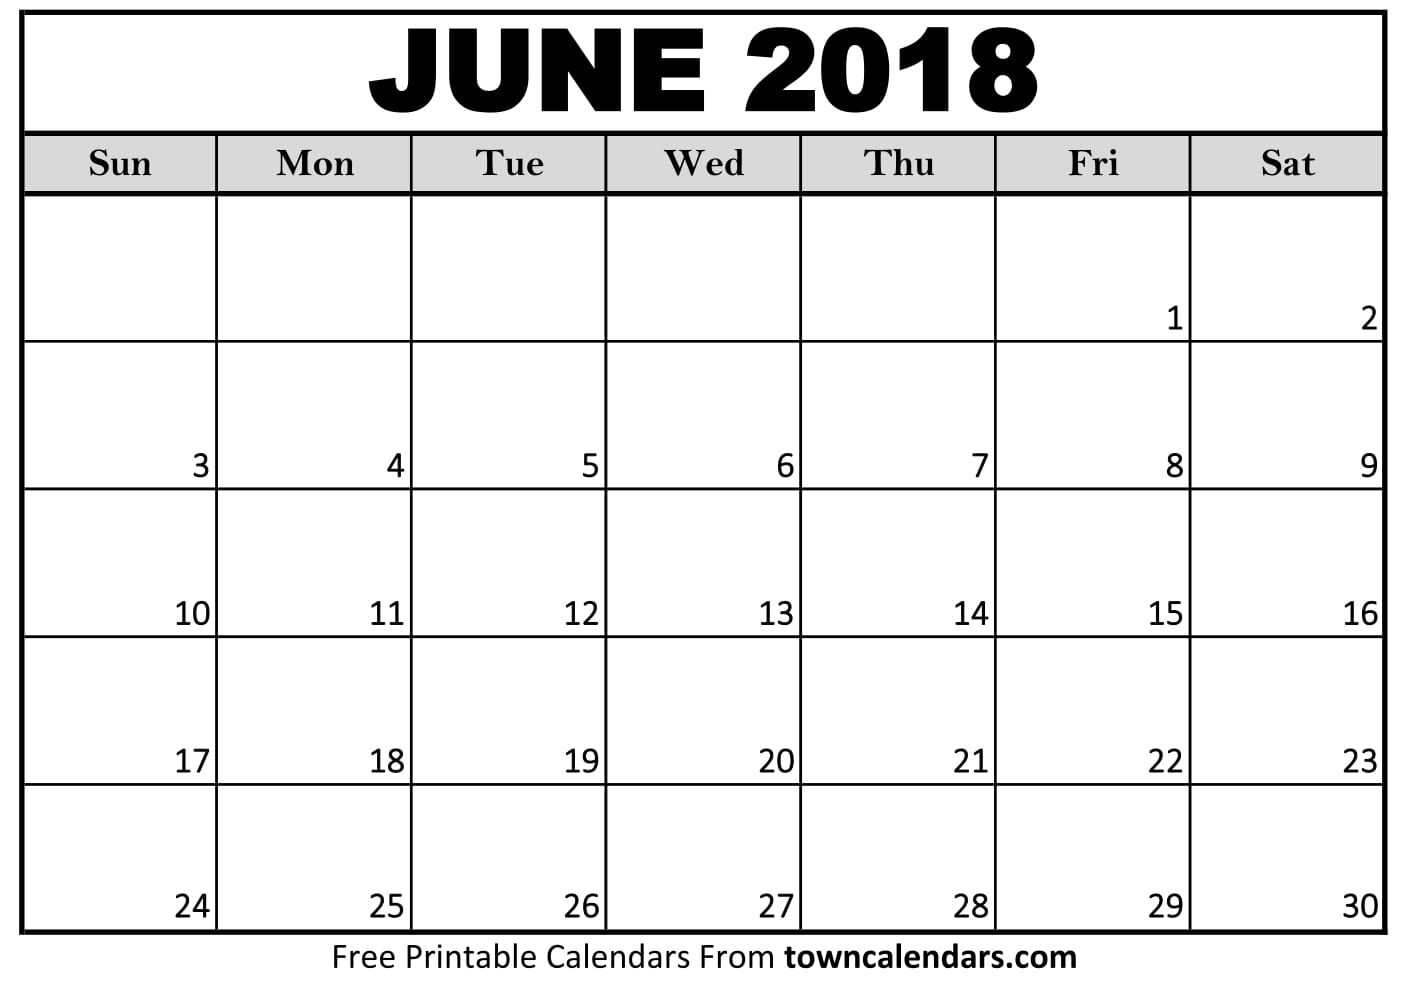 Printable June 2018 Calendar Towncalendars